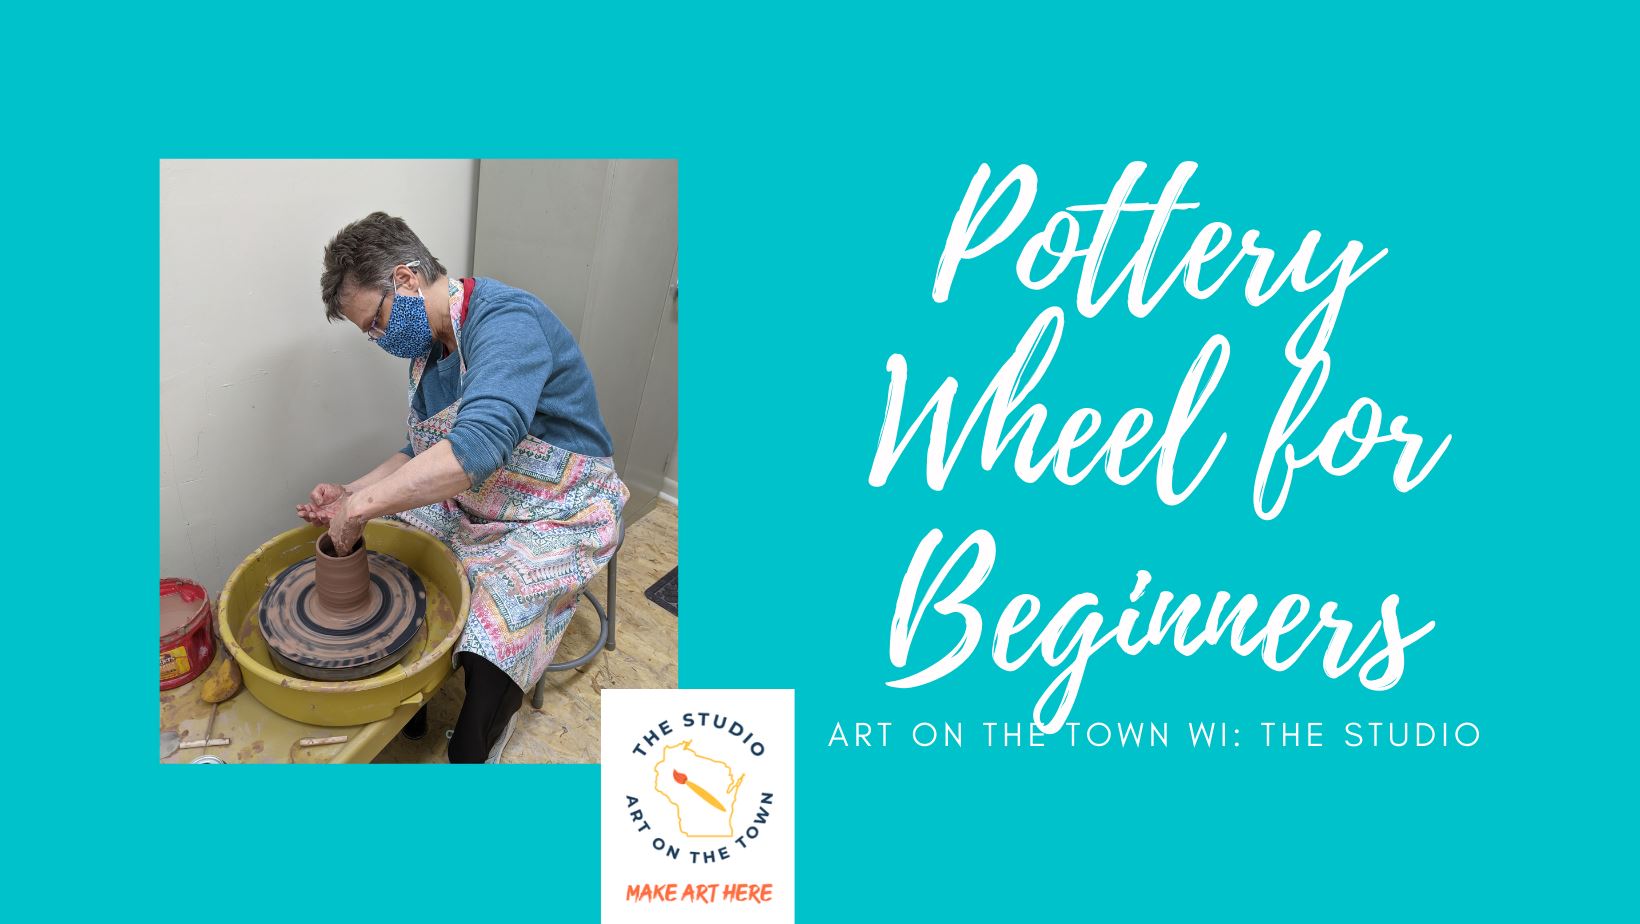 Pottery Wheel for Beginners